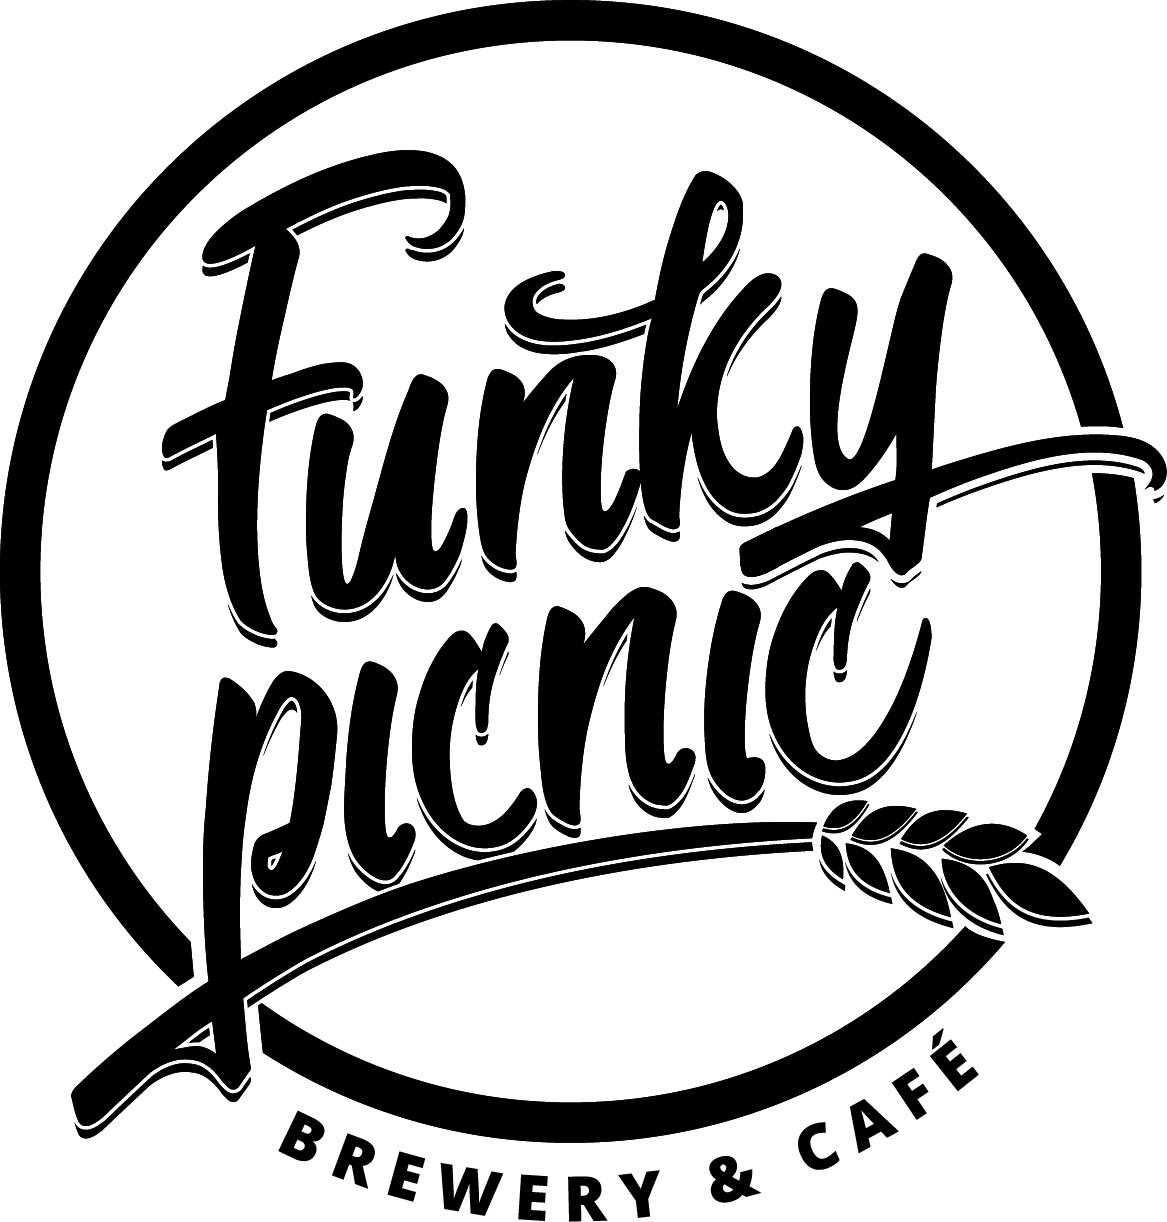 Funky Picnic Brewery & Café